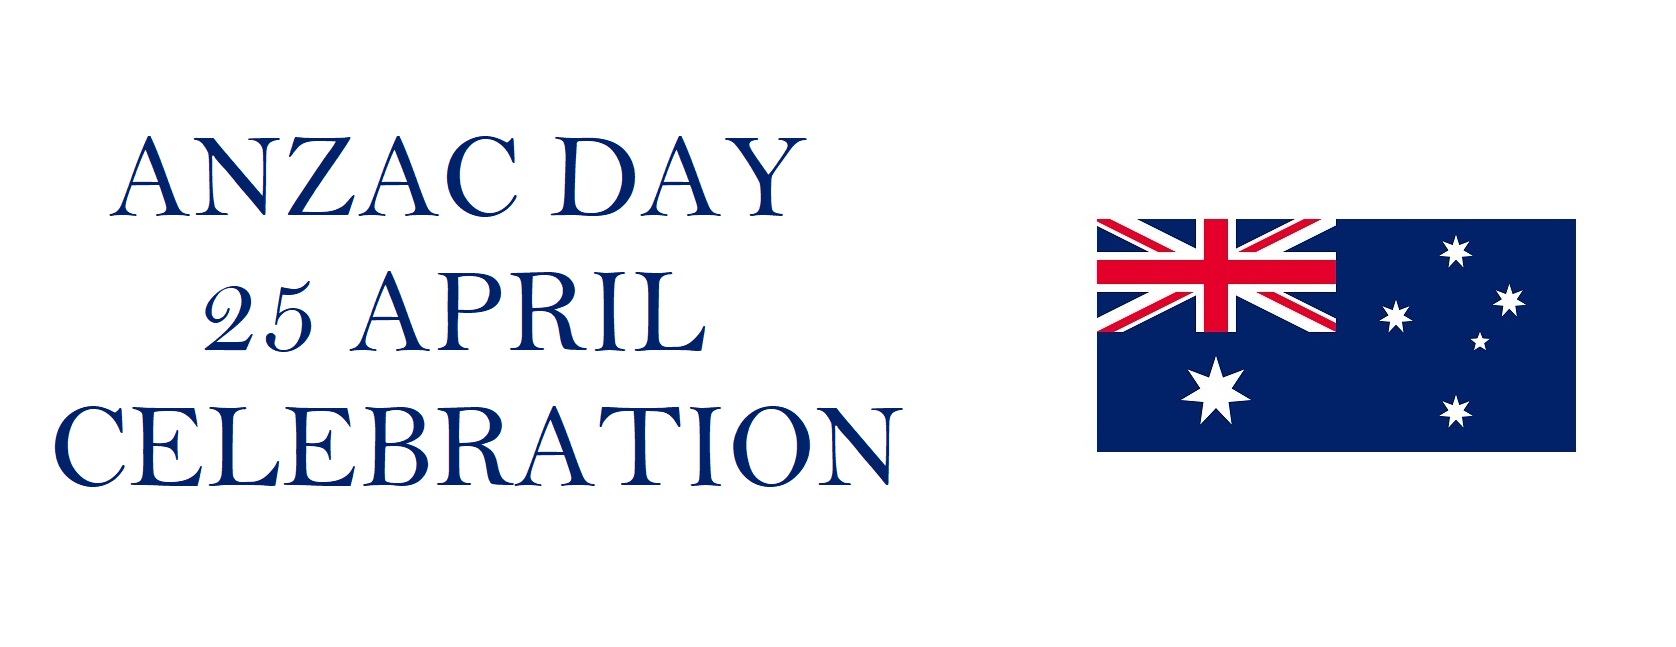 Anzac Day 25 April Public Holiday, Australia